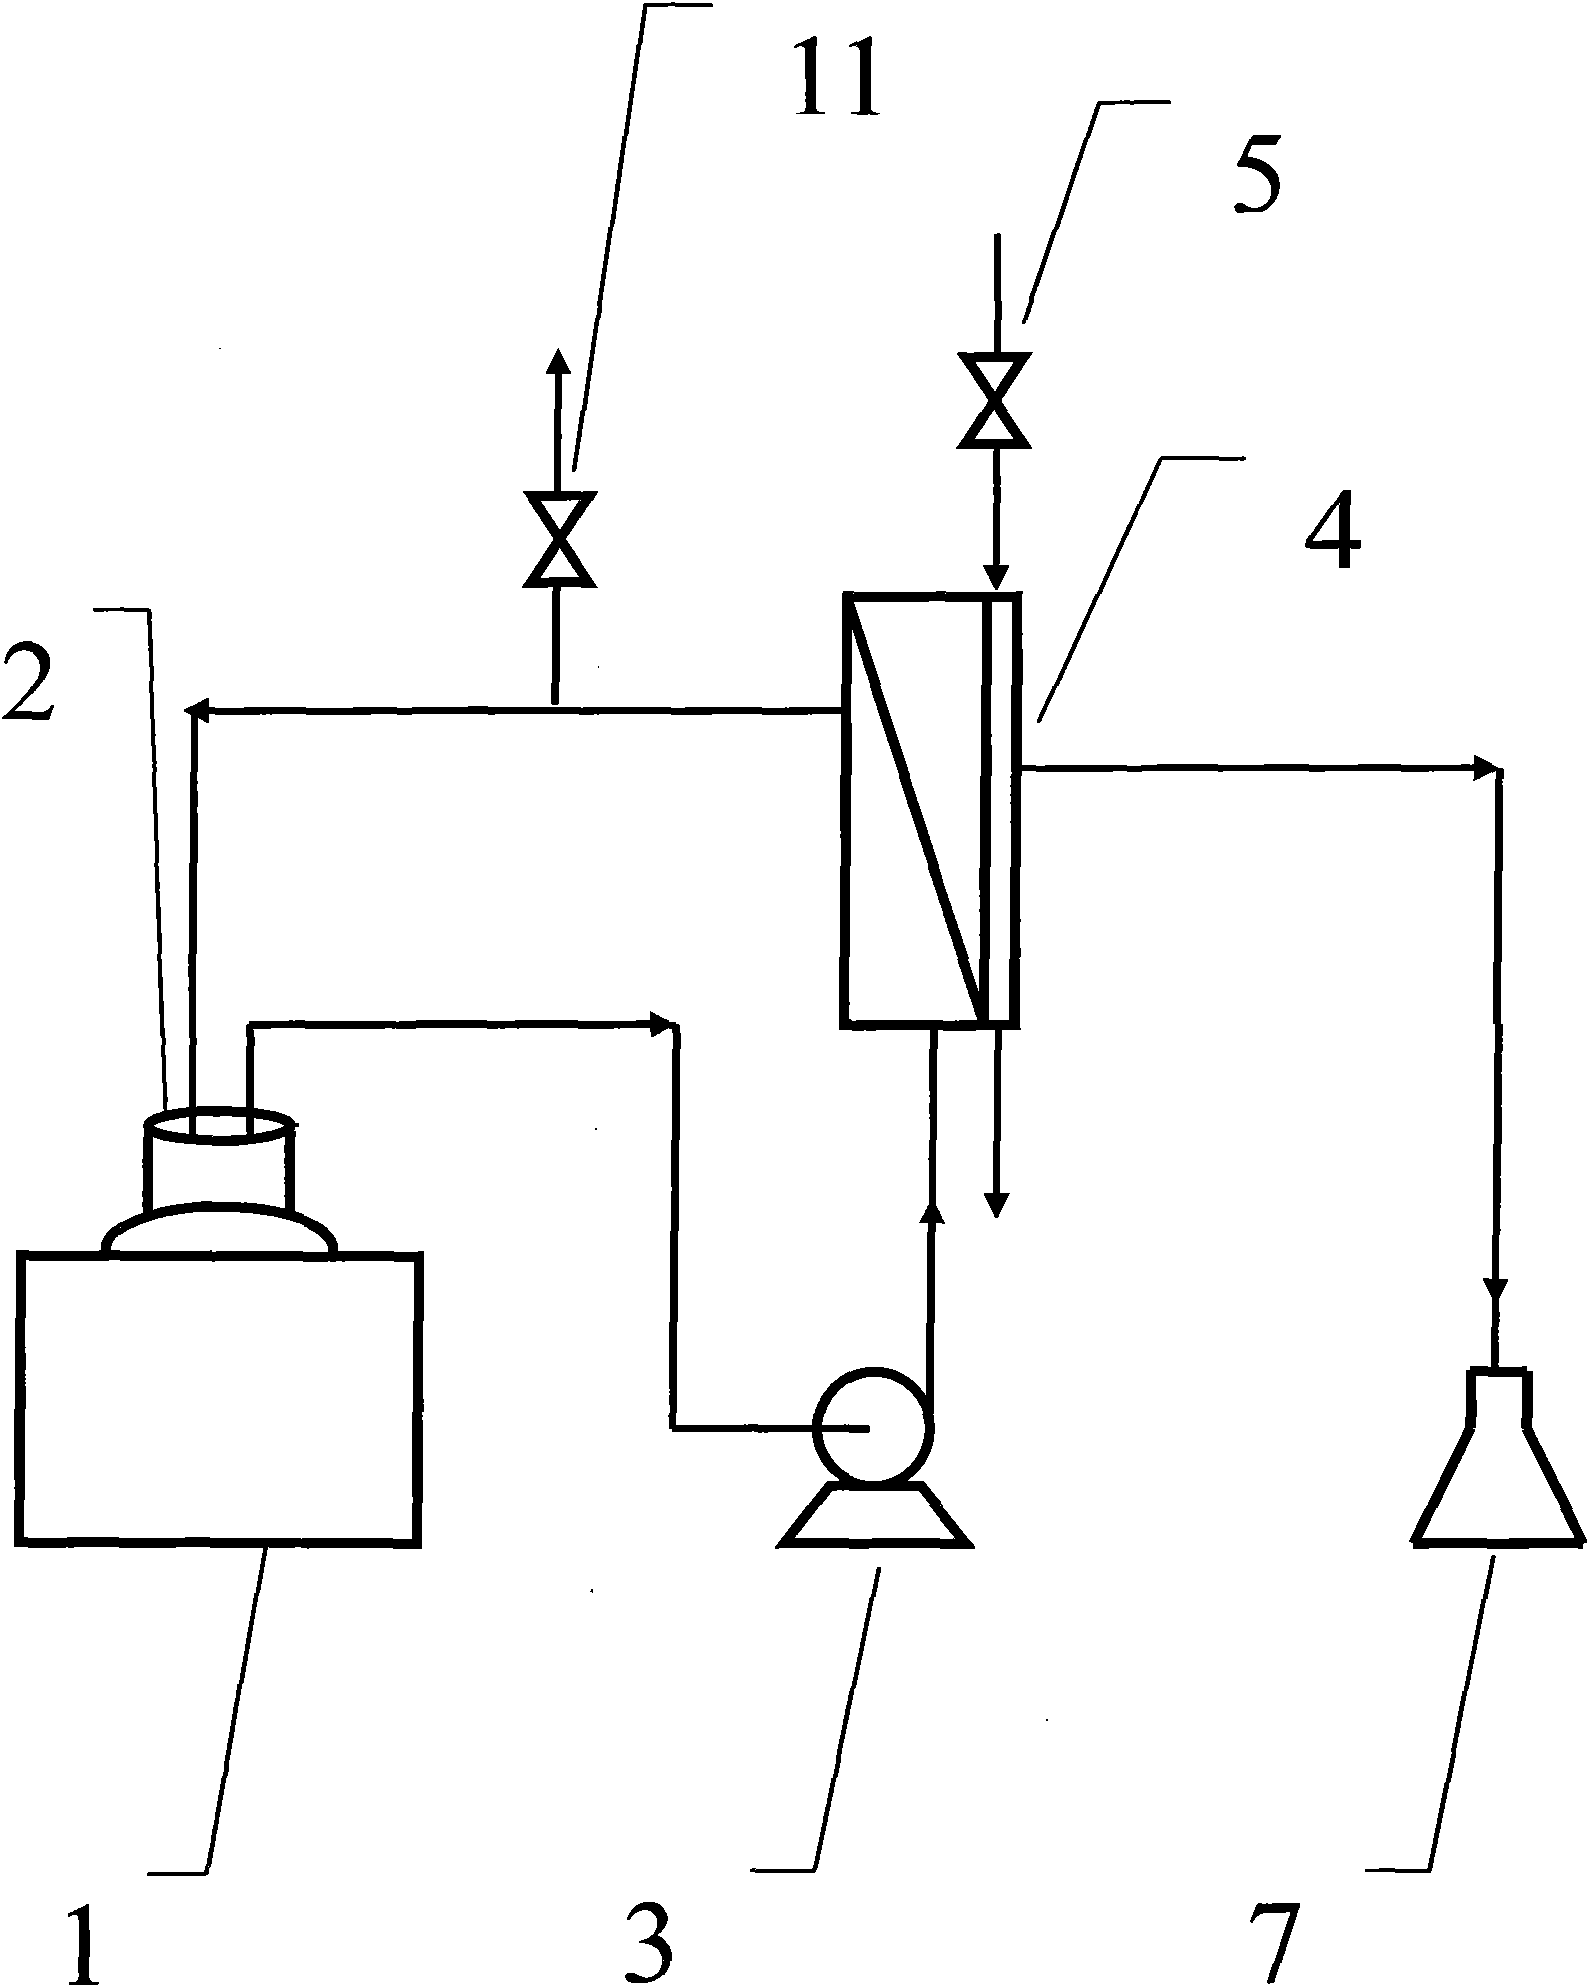 Membrane distillation concentration method for hydrogen peroxide solution